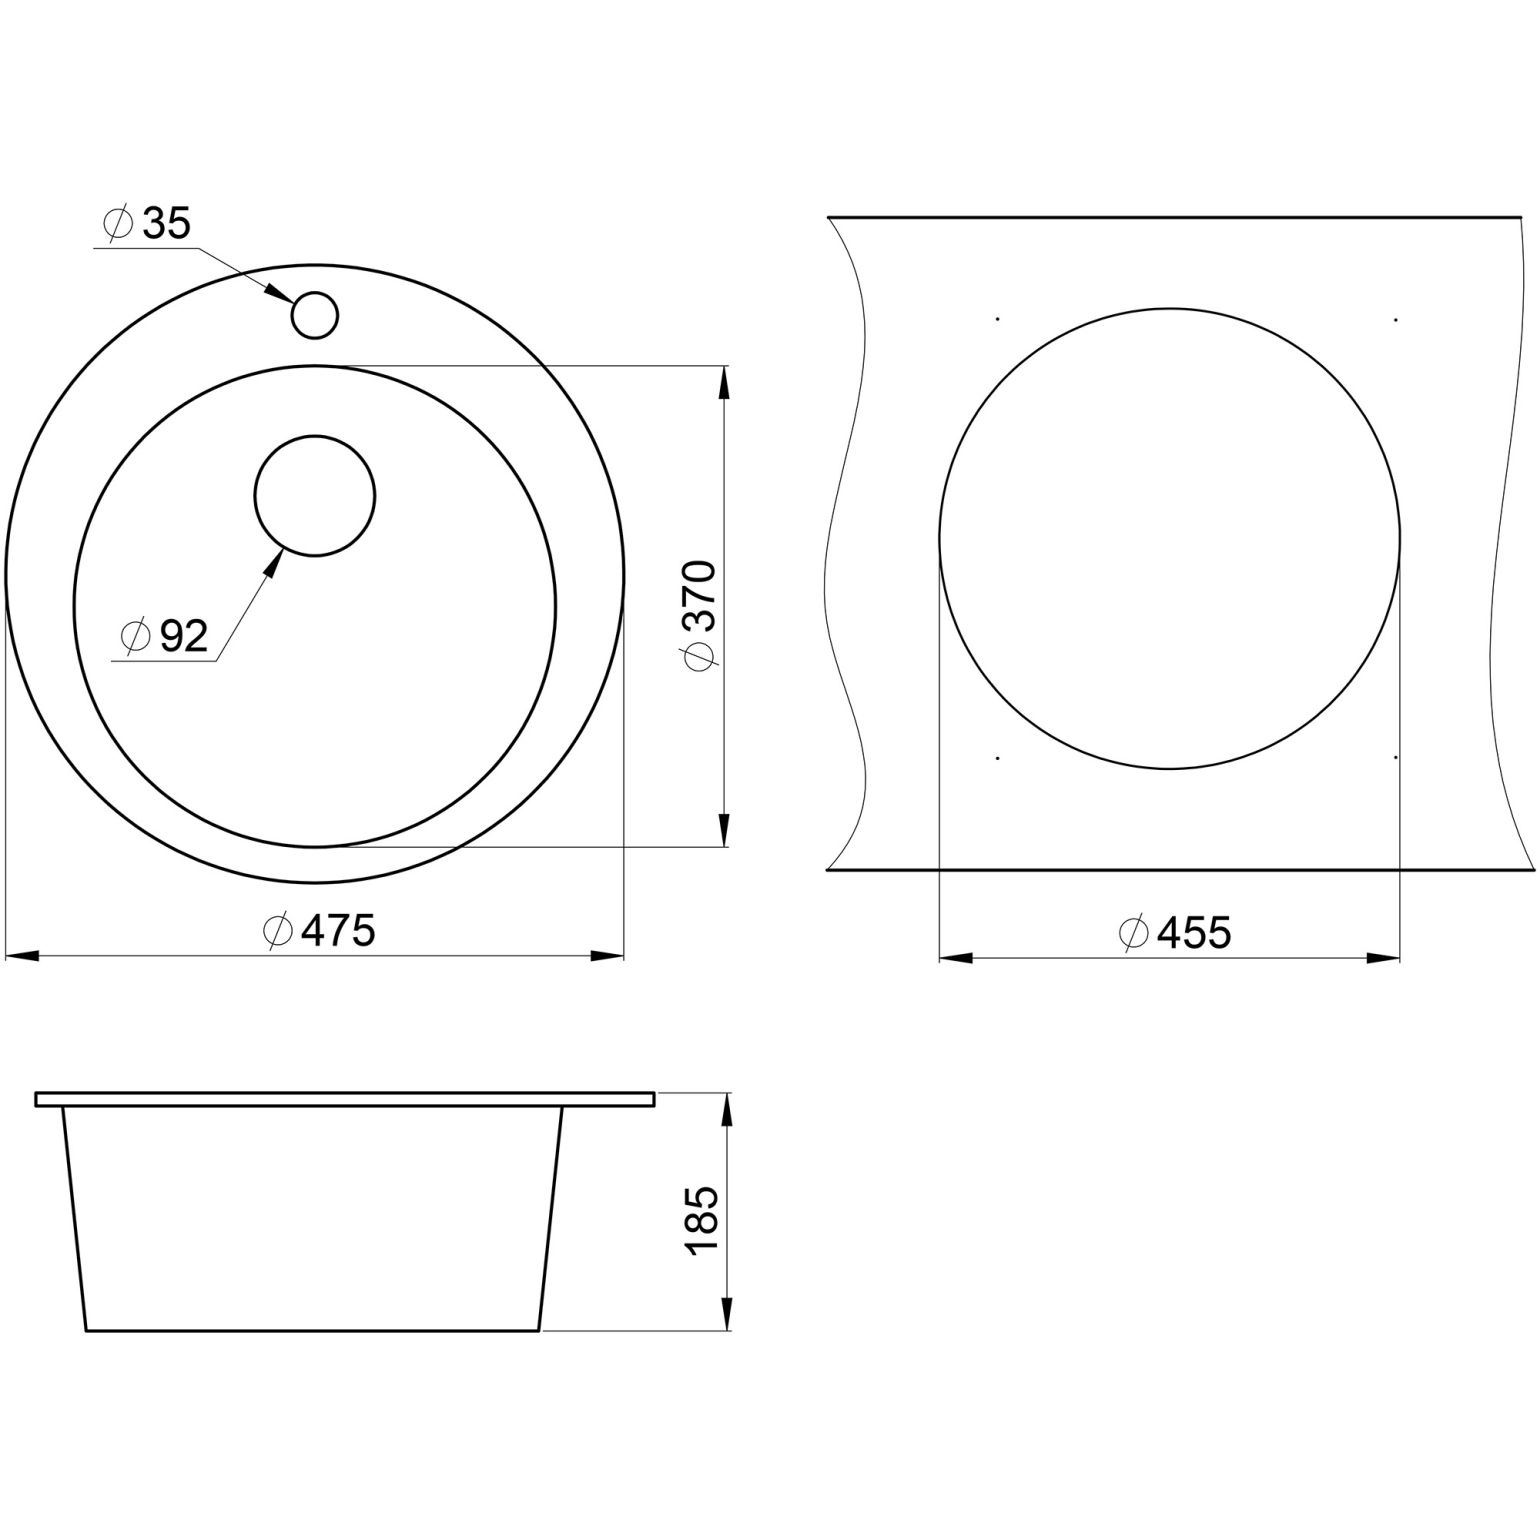 Кухонная мойка кварцевая Granula GR-4801 односекционная круглая, врезная, чаша D 370, цвет графит (4801bg)